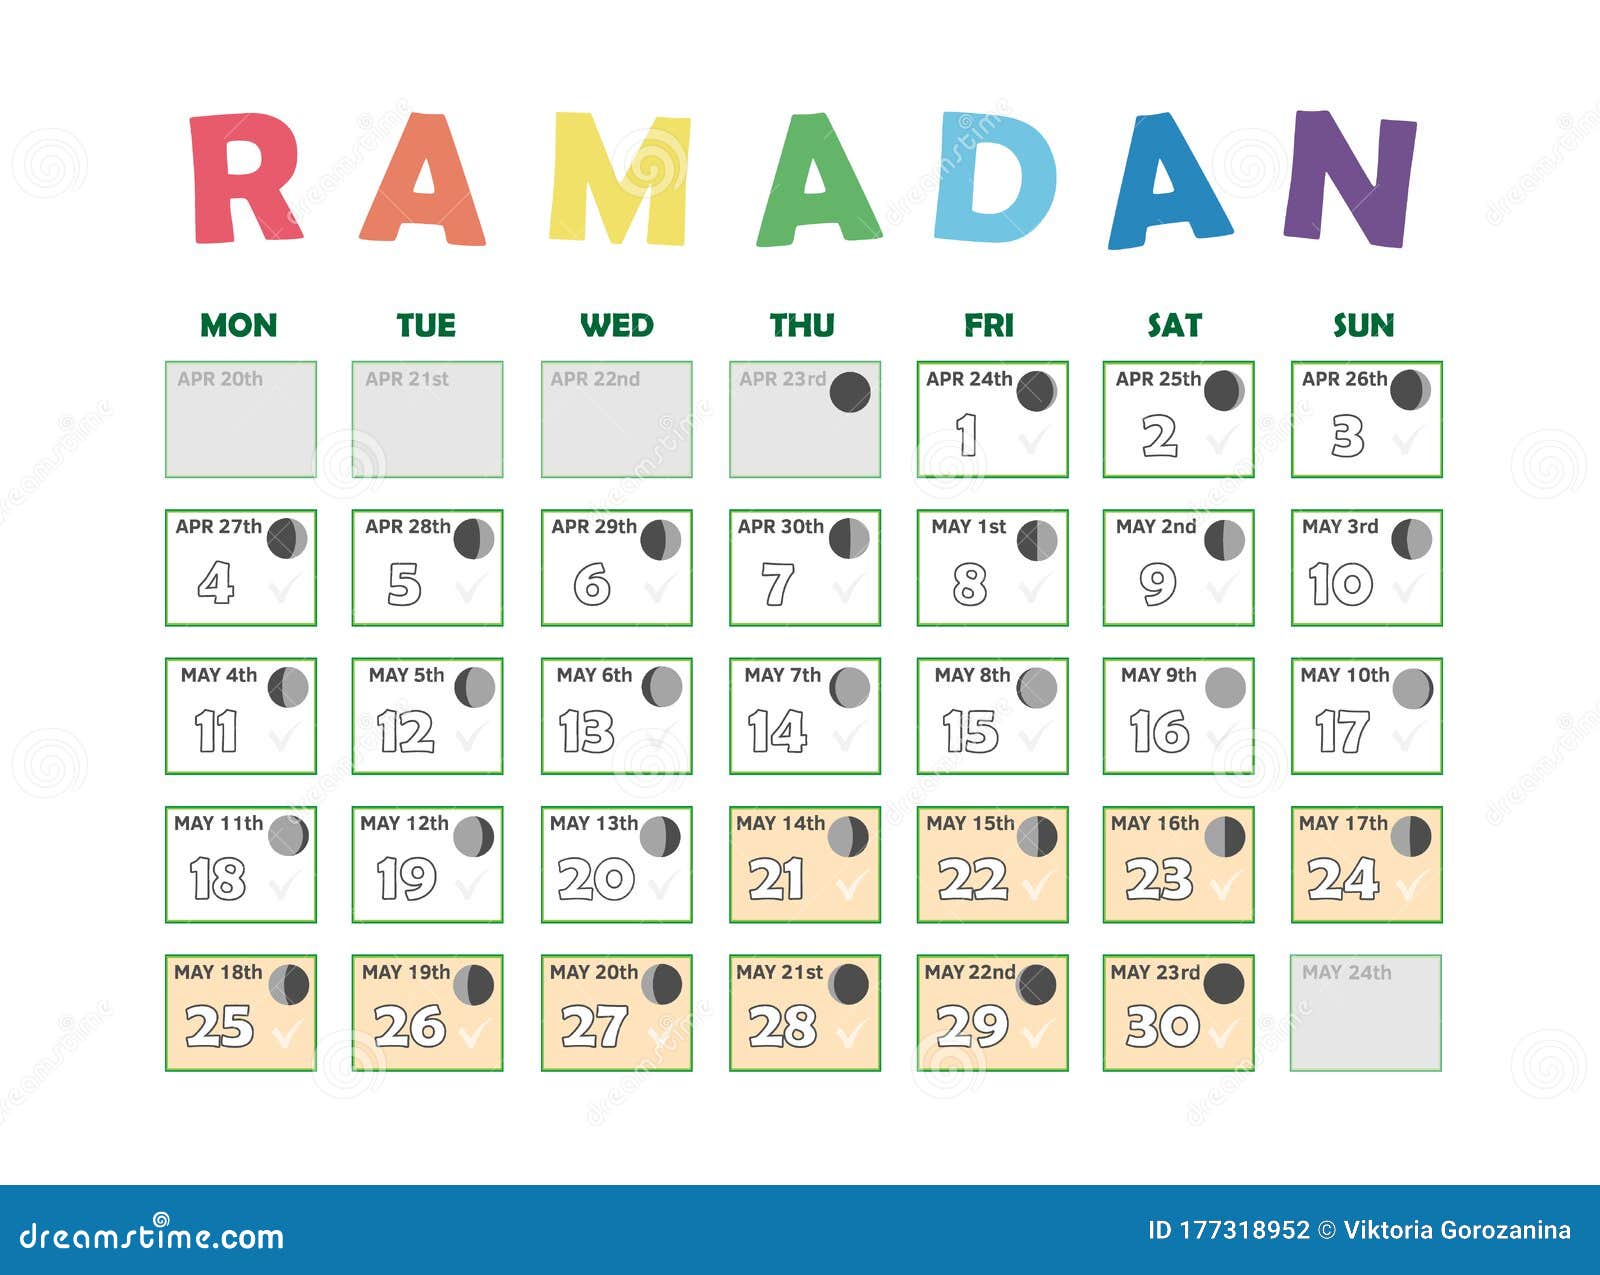 Ramadan Calendar 2020. Fasting Calendar, Moon Cycle Phases, New Moon